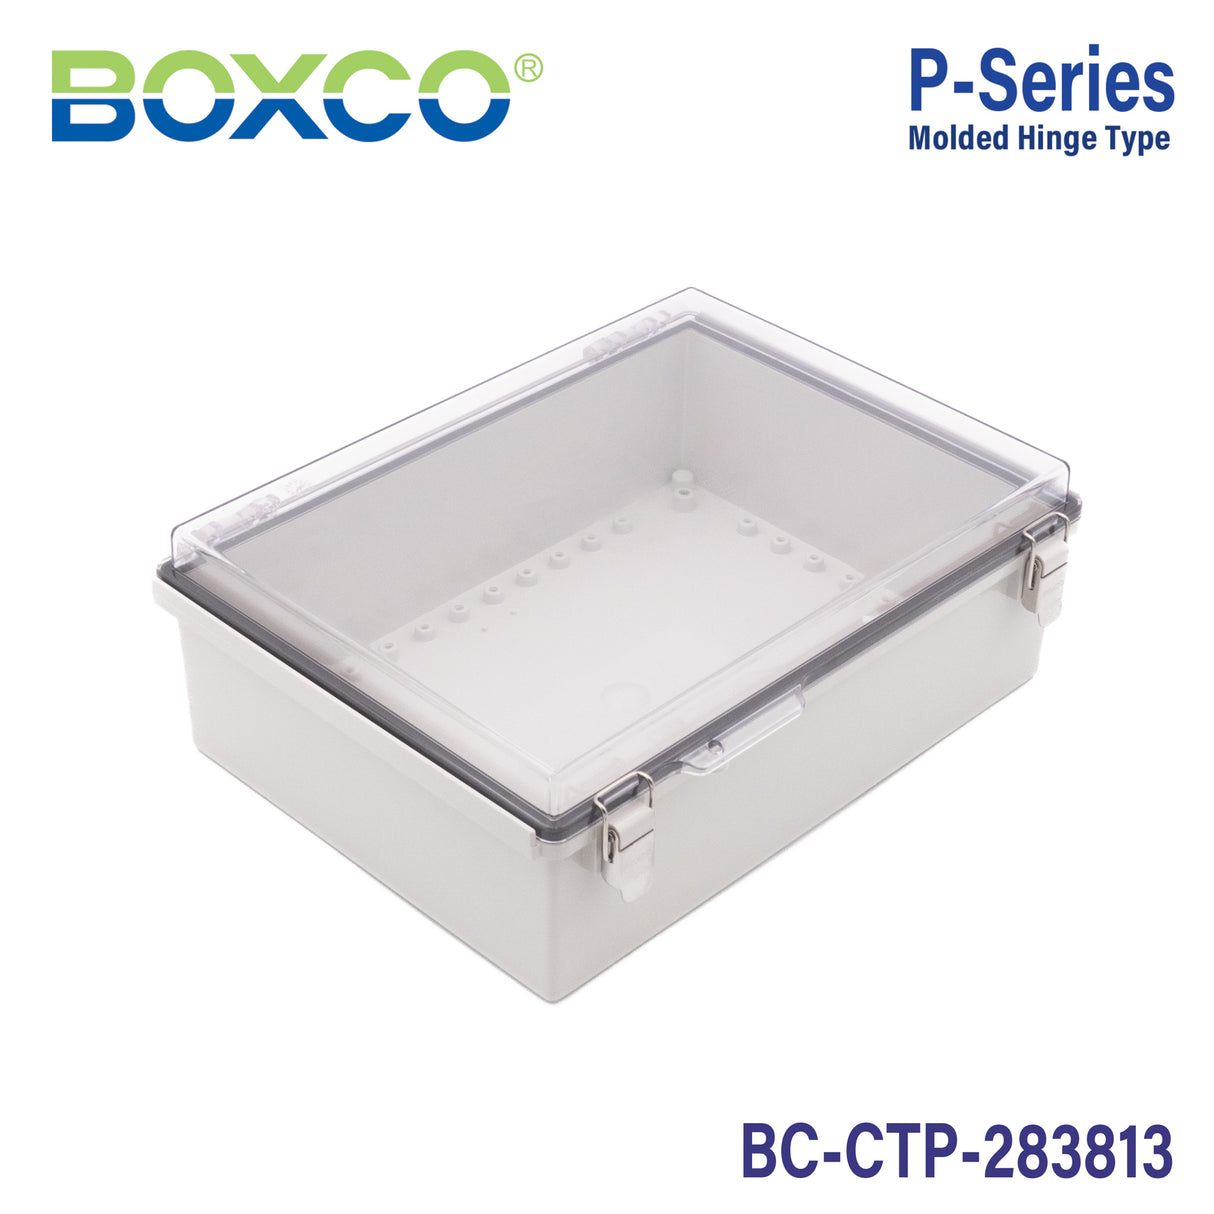 Boxco P-Series 280x380x130mm Plastic Enclosure, IP67, IK08, PC, Transparent Cover, Molded Hinge and Latch Type